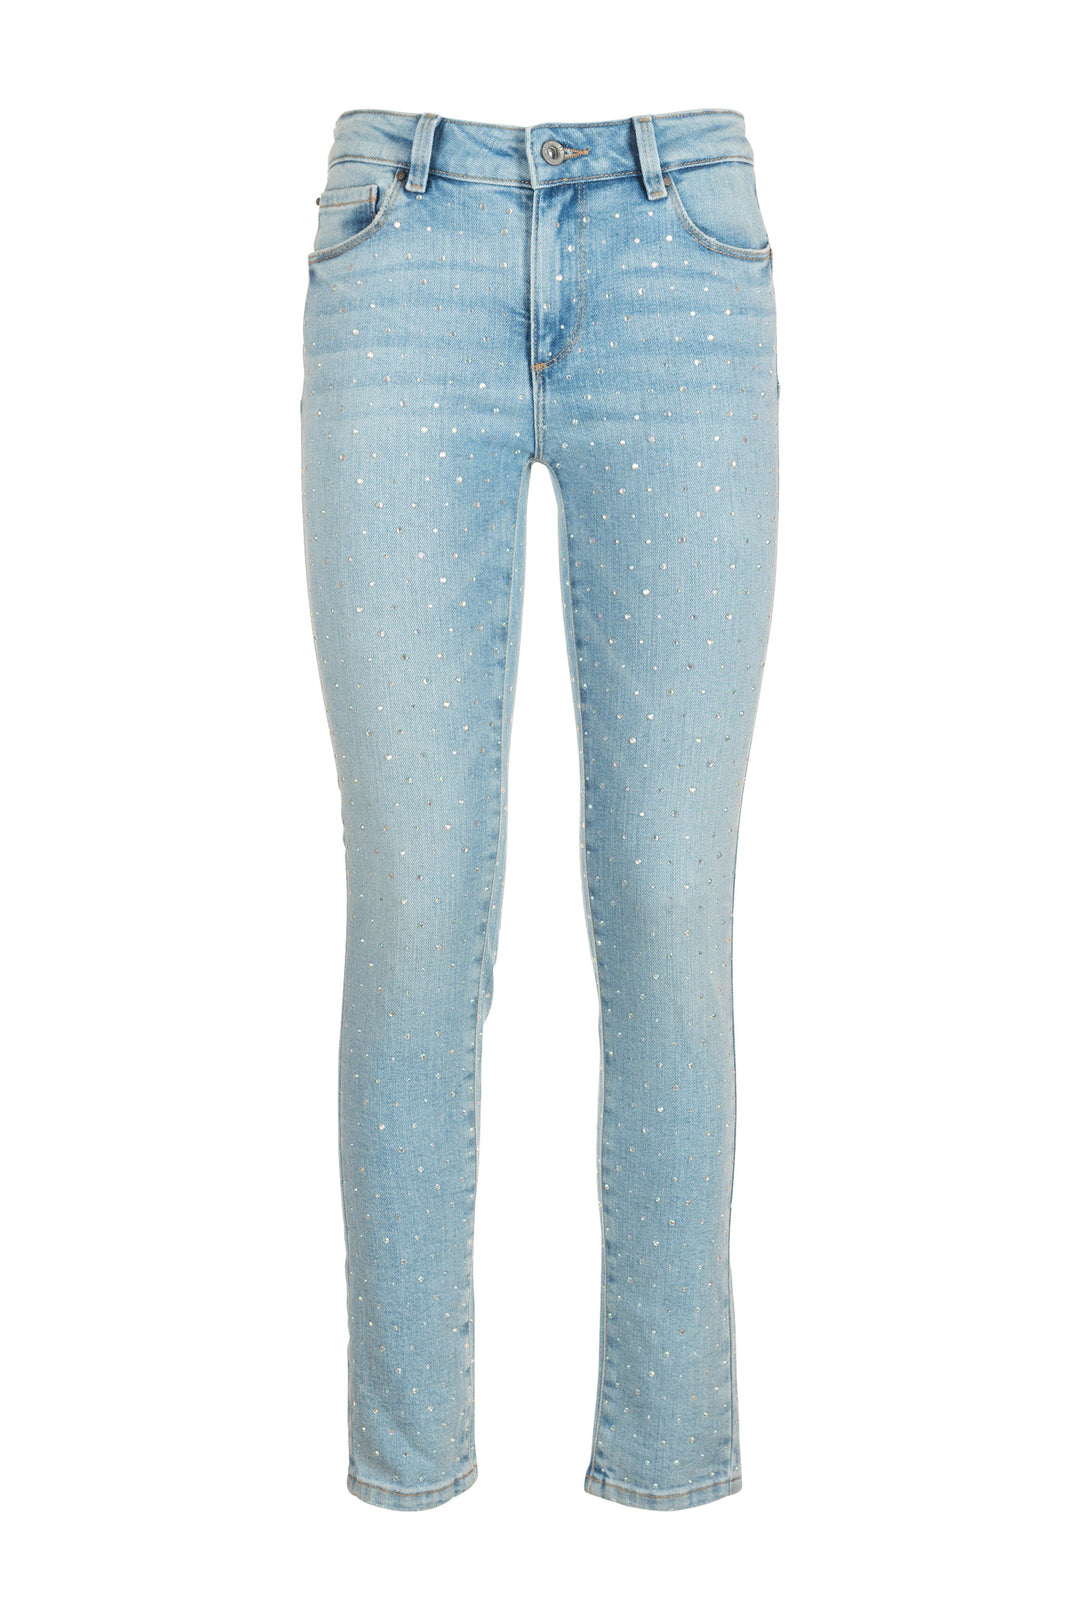 FRACOMINA Jeans cropped in denim stonewash con perle applicate - Mancinelli 1954